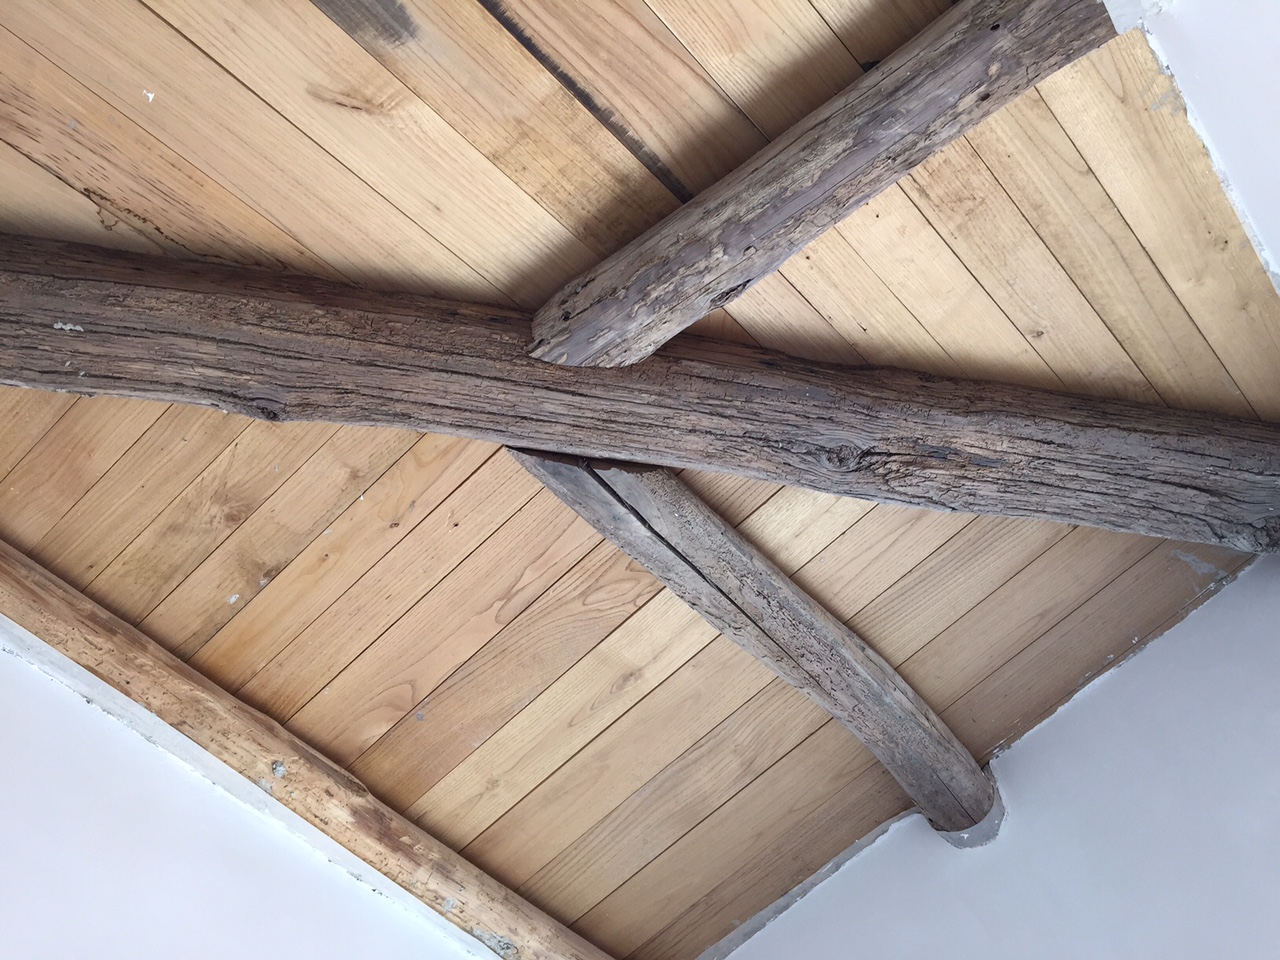 Restored wooden ceiling